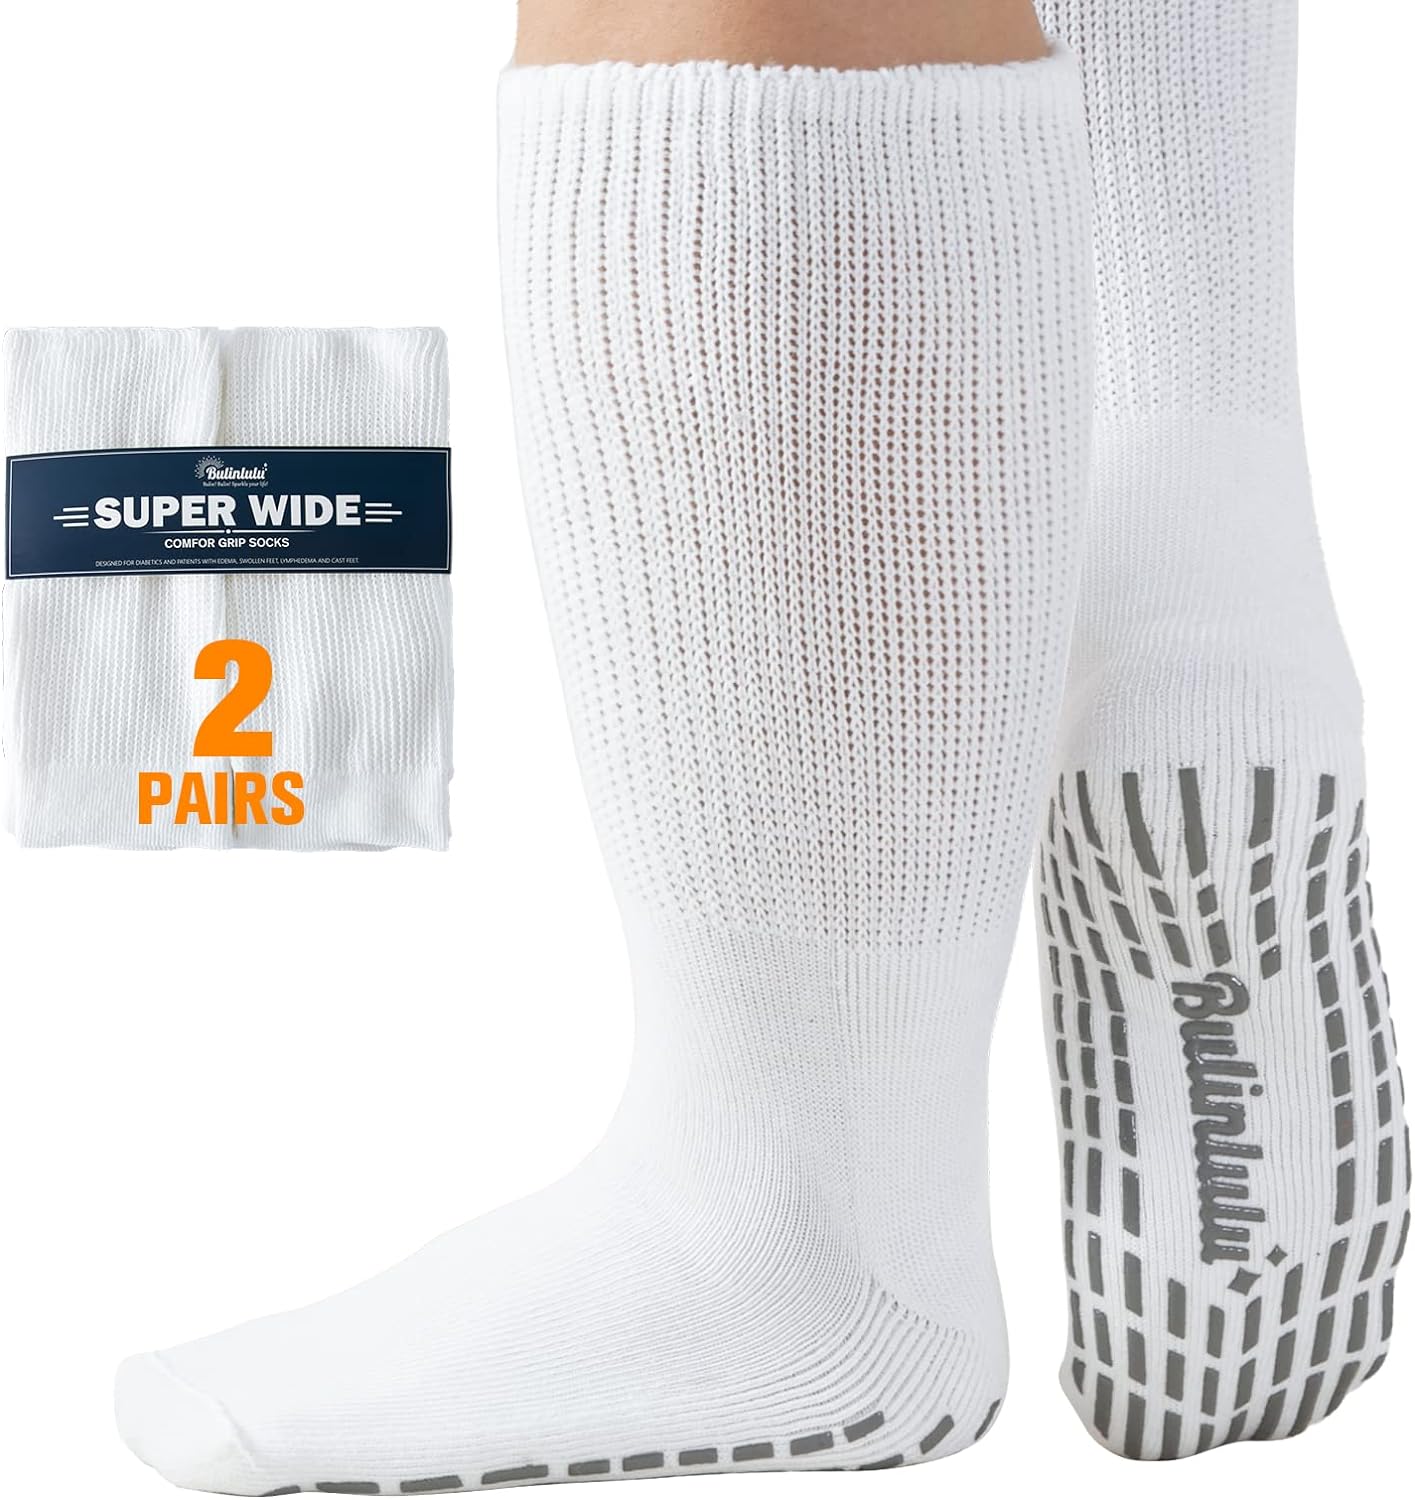 Bulinlulu 2 Pairs Extra Wide Socks for Lymphedema Drainage - Viasox Diabetic Hospital Socks for Mens 10-13 Extra Wide for Swollen Feet, Non Skid Edema Socks, Bariatric Socks Women Cast Sock-2 White